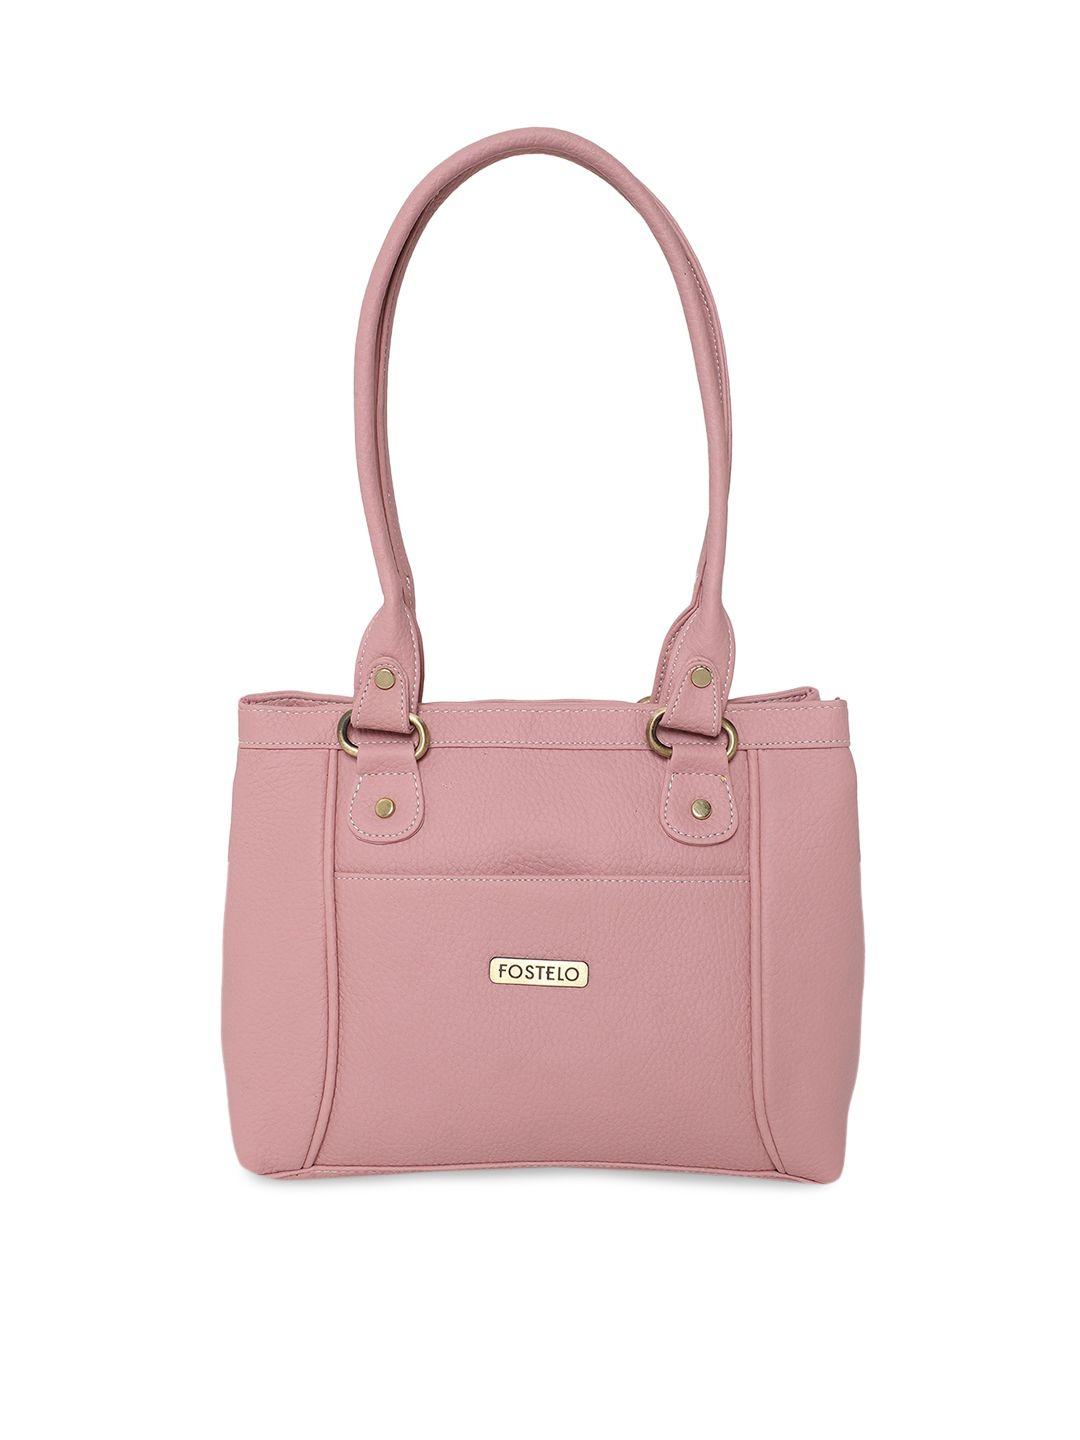 fostelo pink pu structured handheld bag